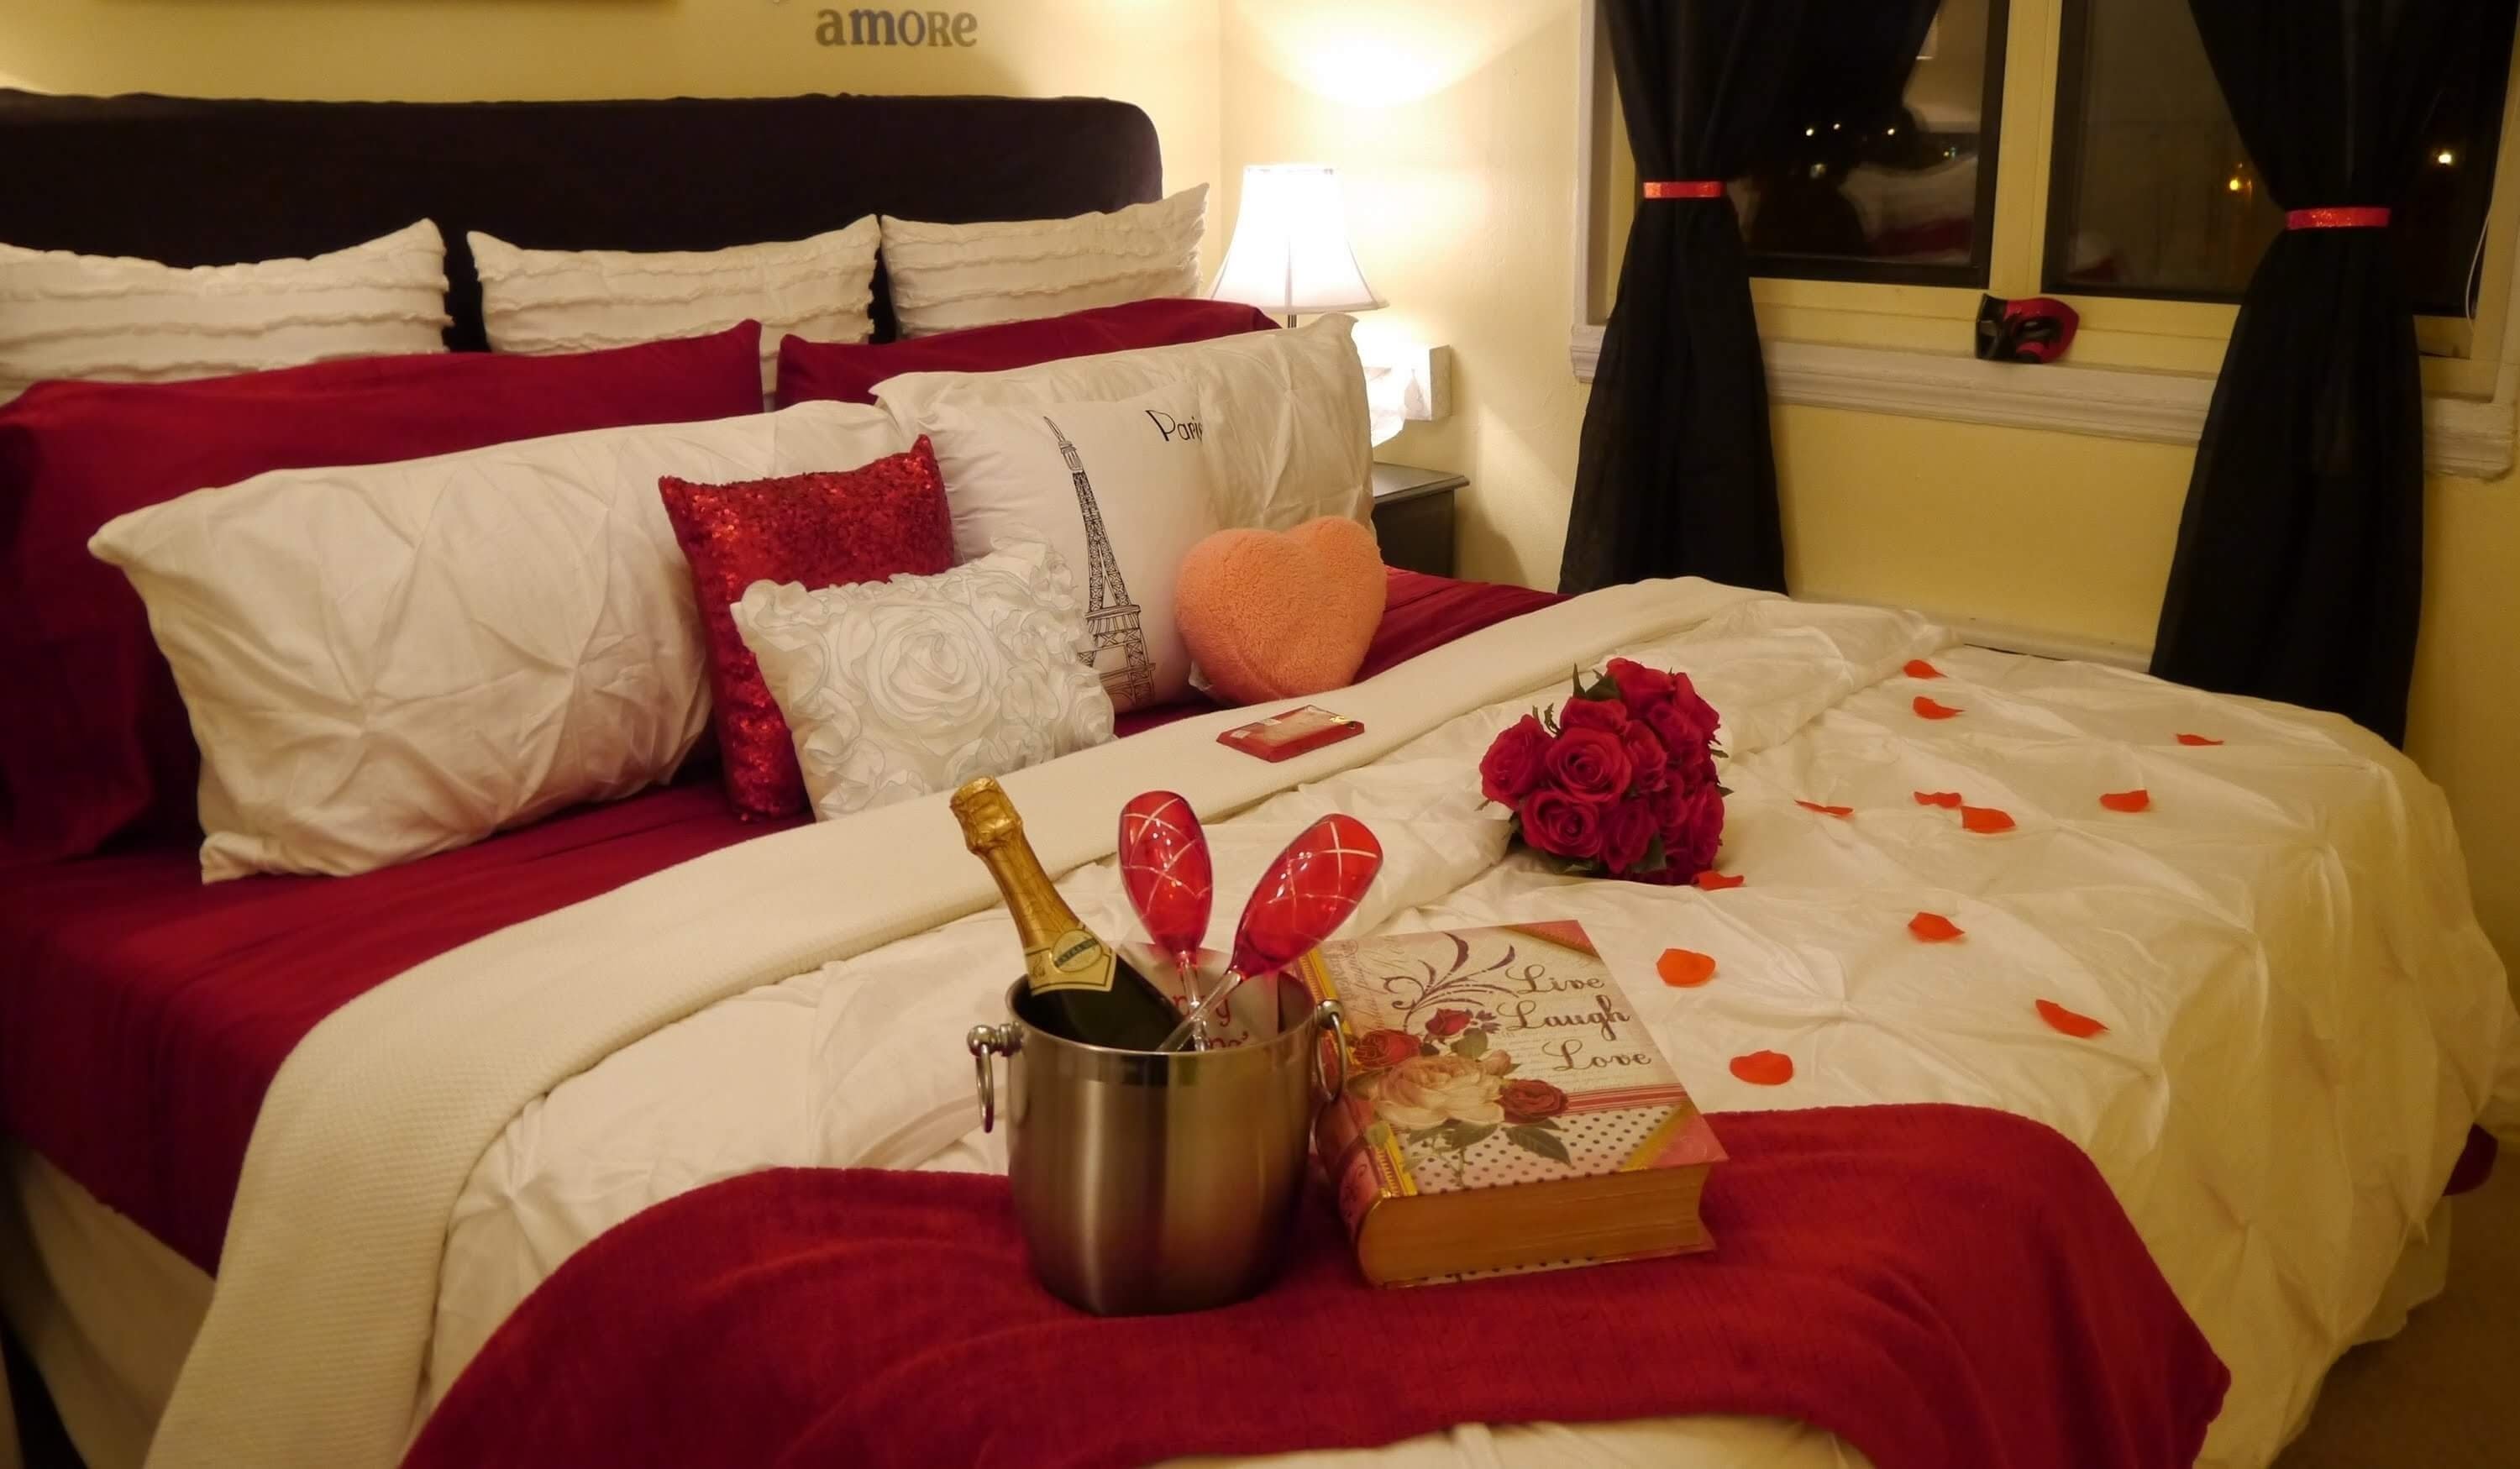 10 Lovable Romantic Hotel Ideas For Him romantic valentines day ideas him estorecart home living now 46672 5 2022